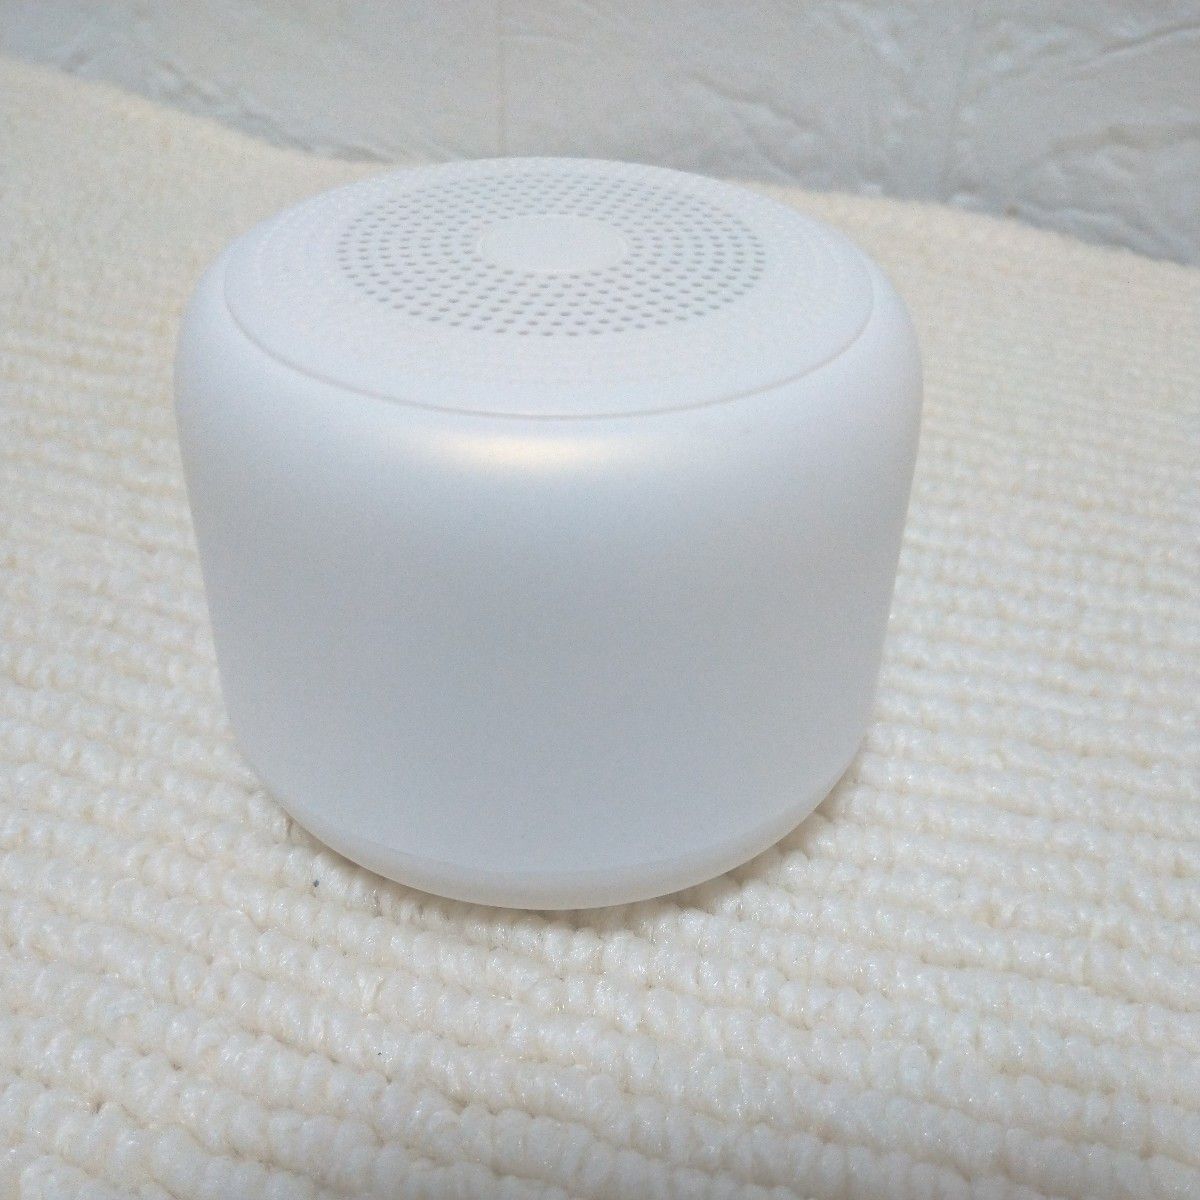 Bluetoothスピーカー 軽量型 大音量  IPX7 防水耐衝撃 コンパクト 風呂 ワイヤレス